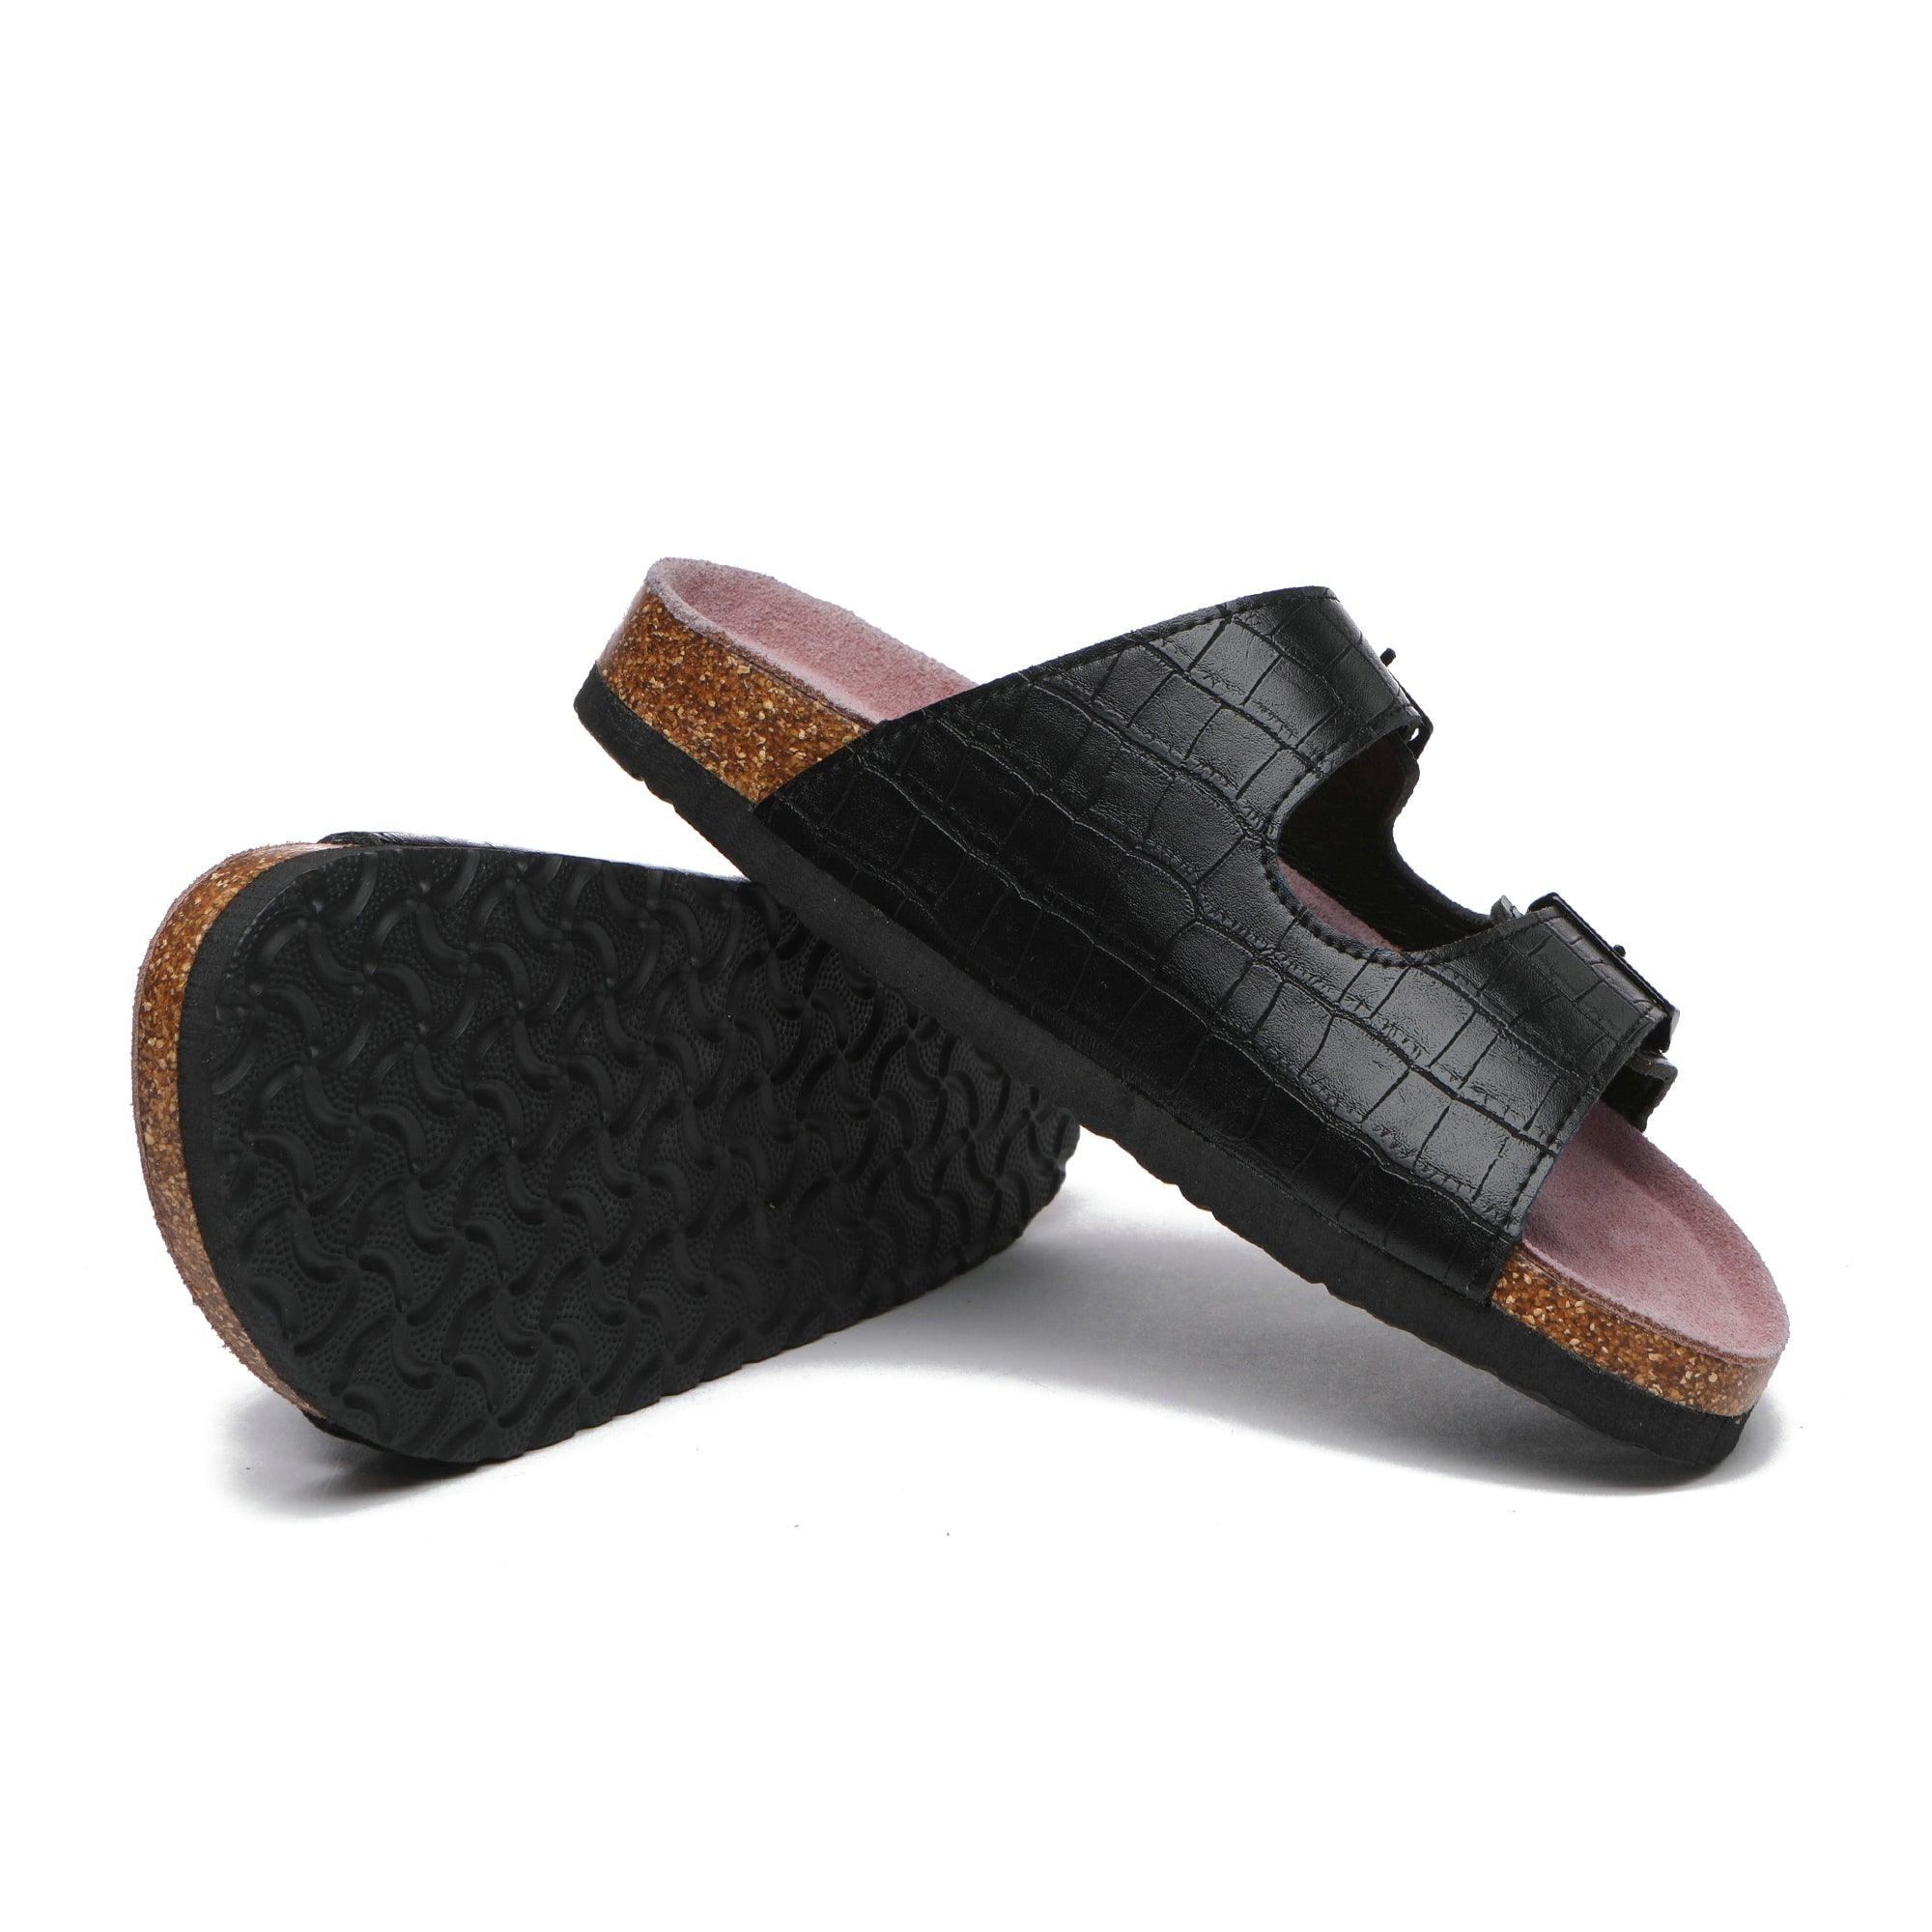 Noah Summer Leather Sandals